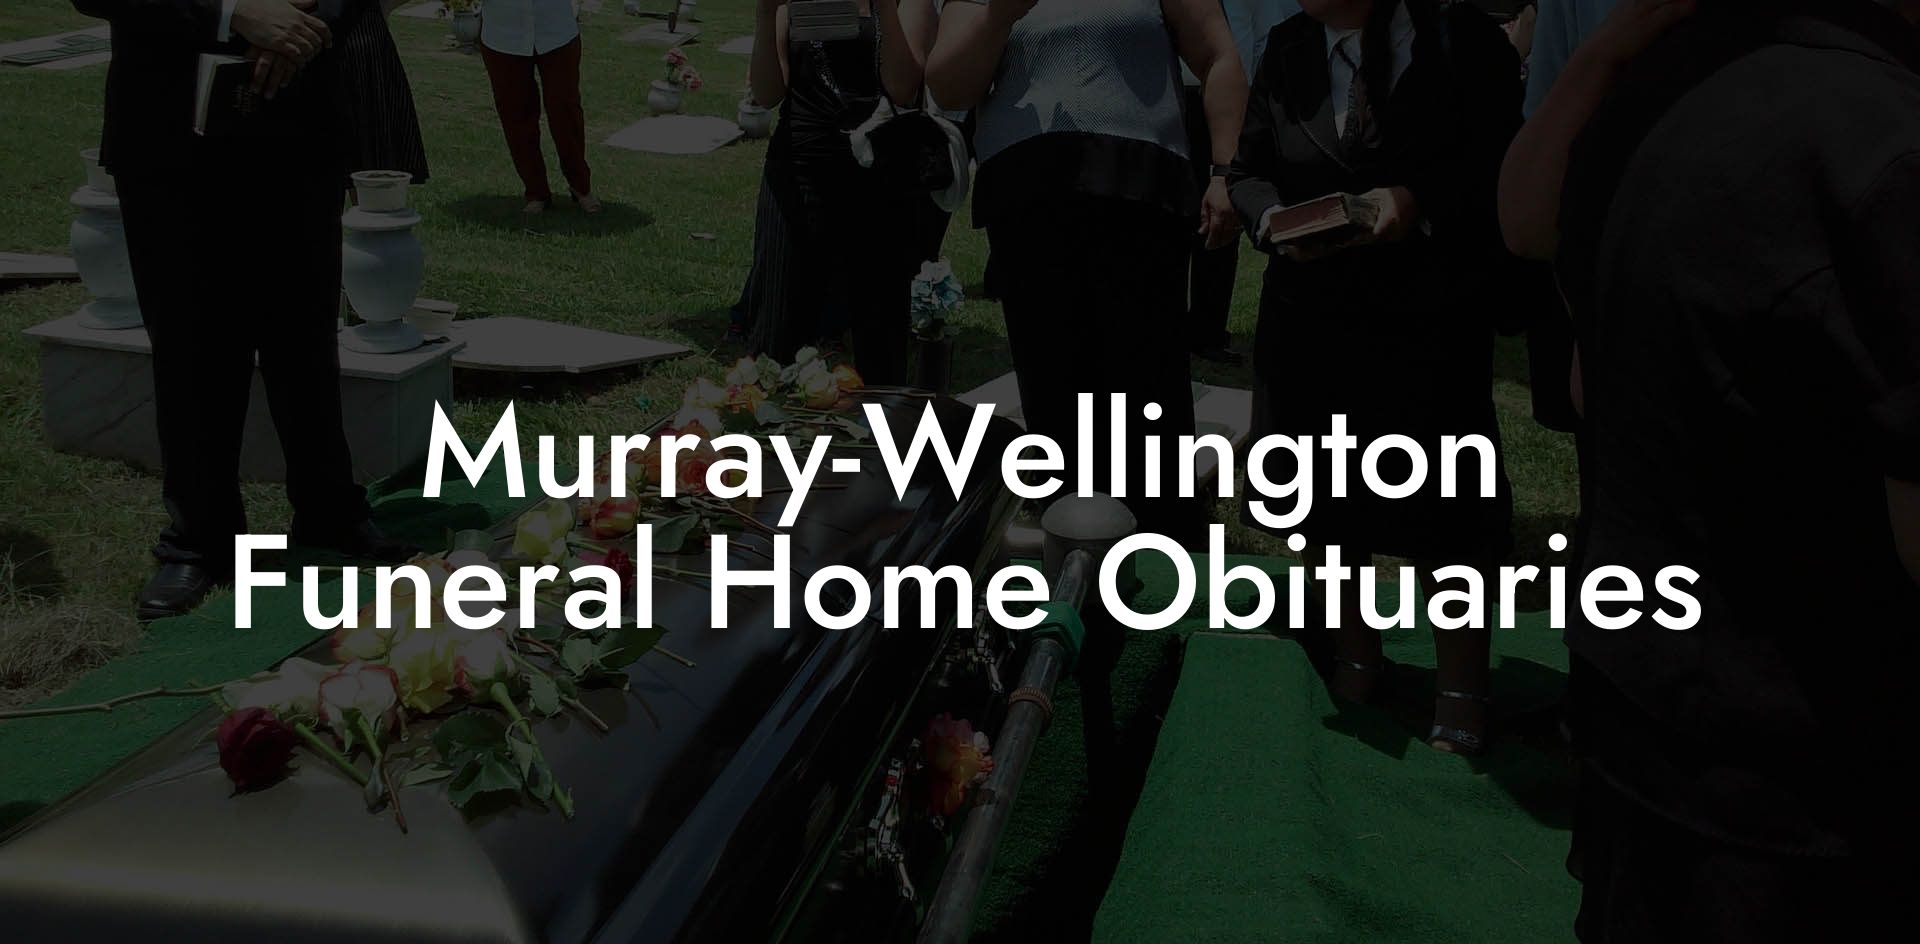 Murray-Wellington Funeral Home Obituaries